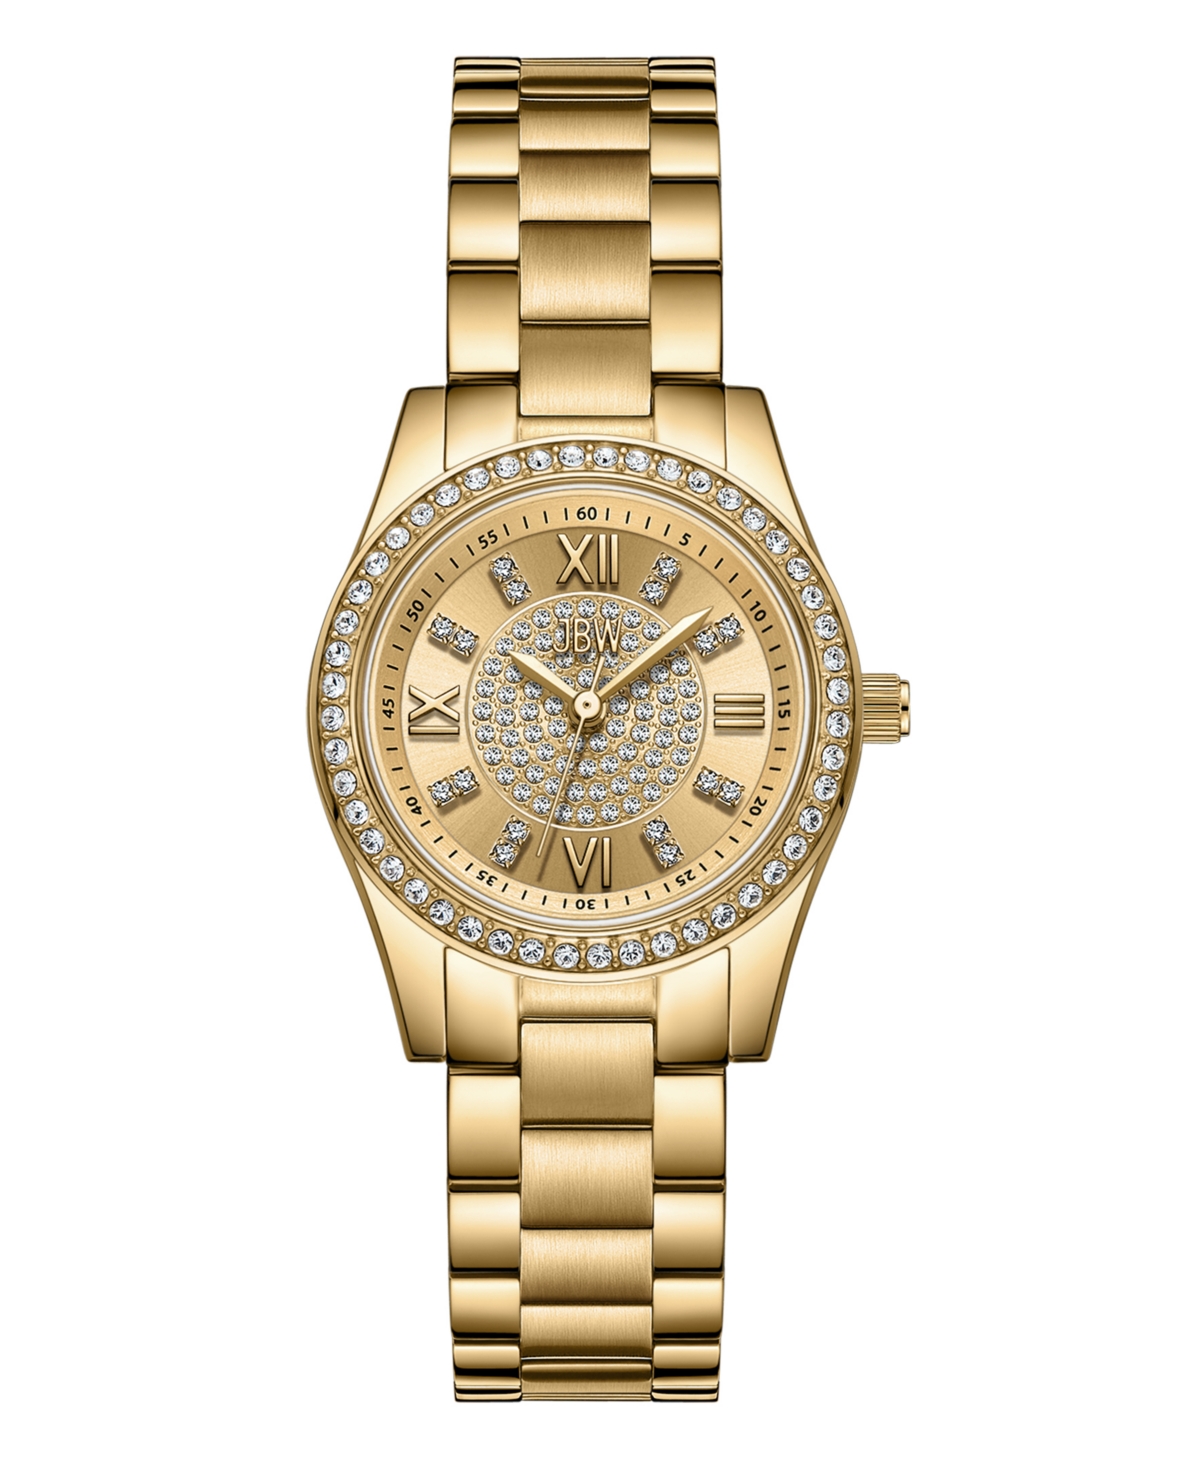 Women's Mondrian 28 Quartz 18k Gold Plated Stainless Steel Watch, 28mm - Gold